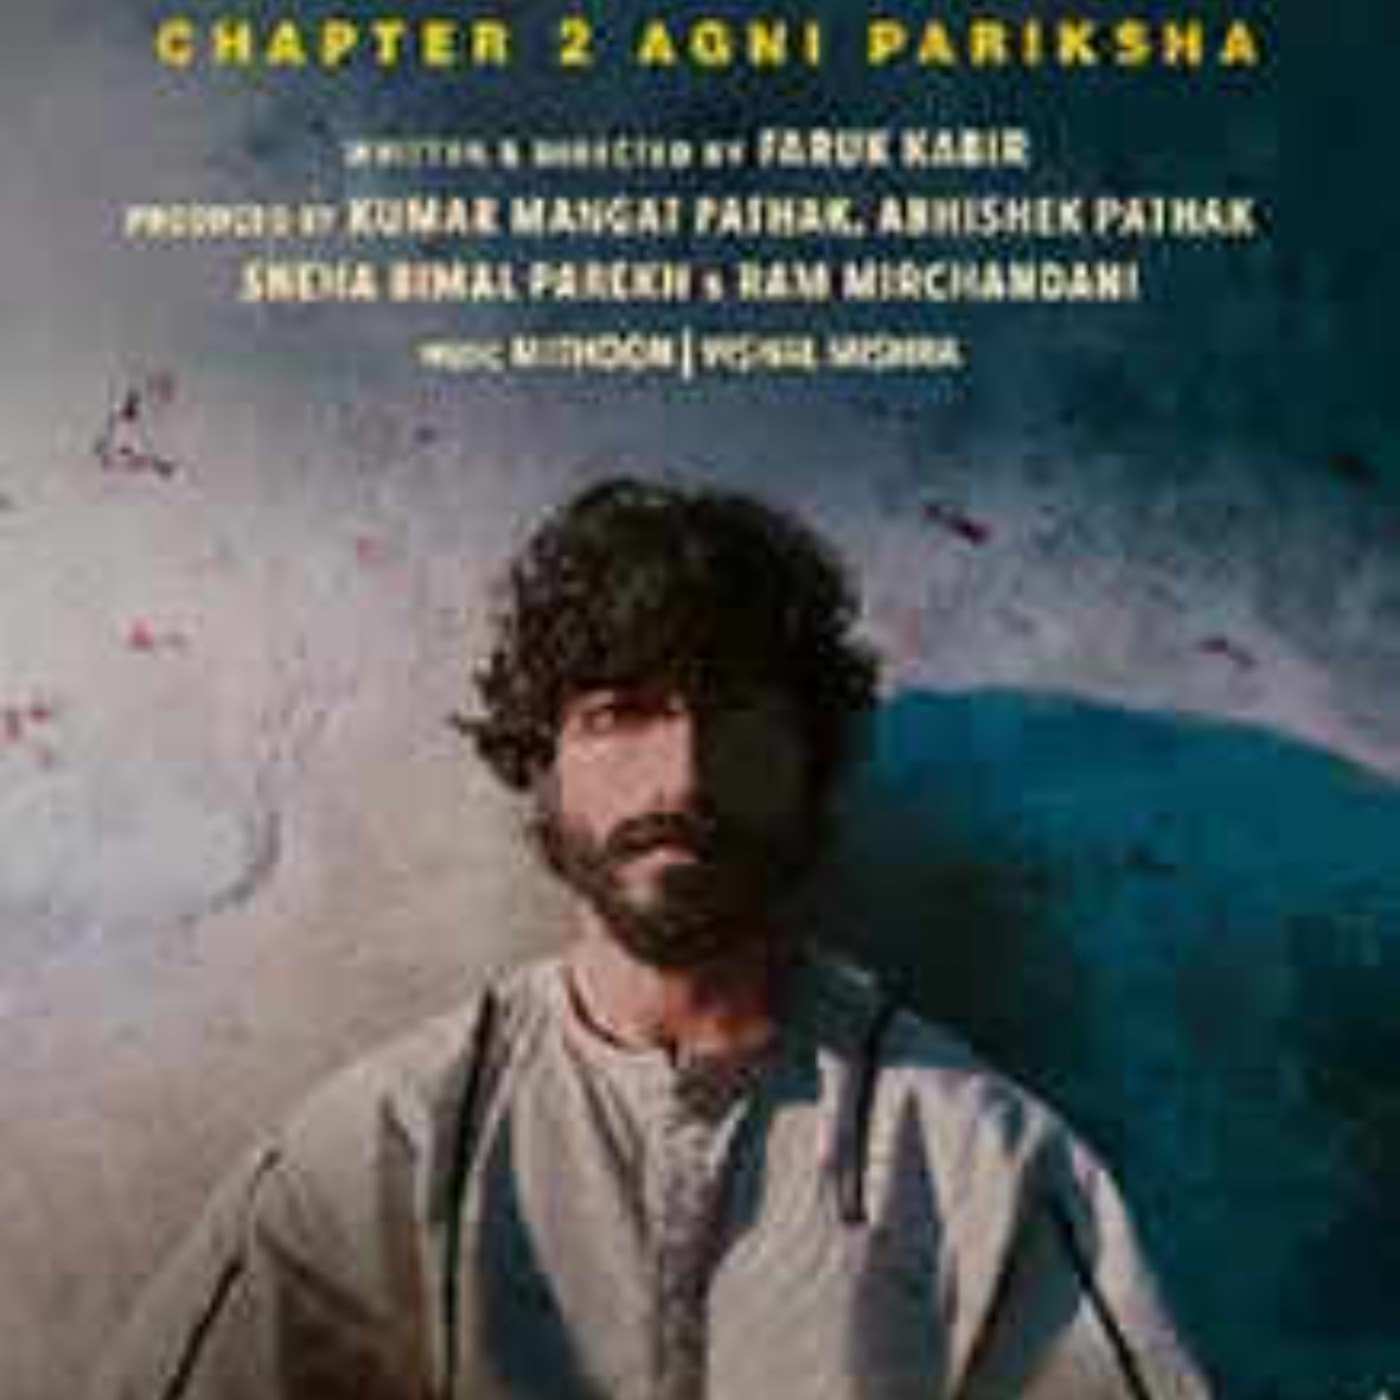 pariksha full movie download